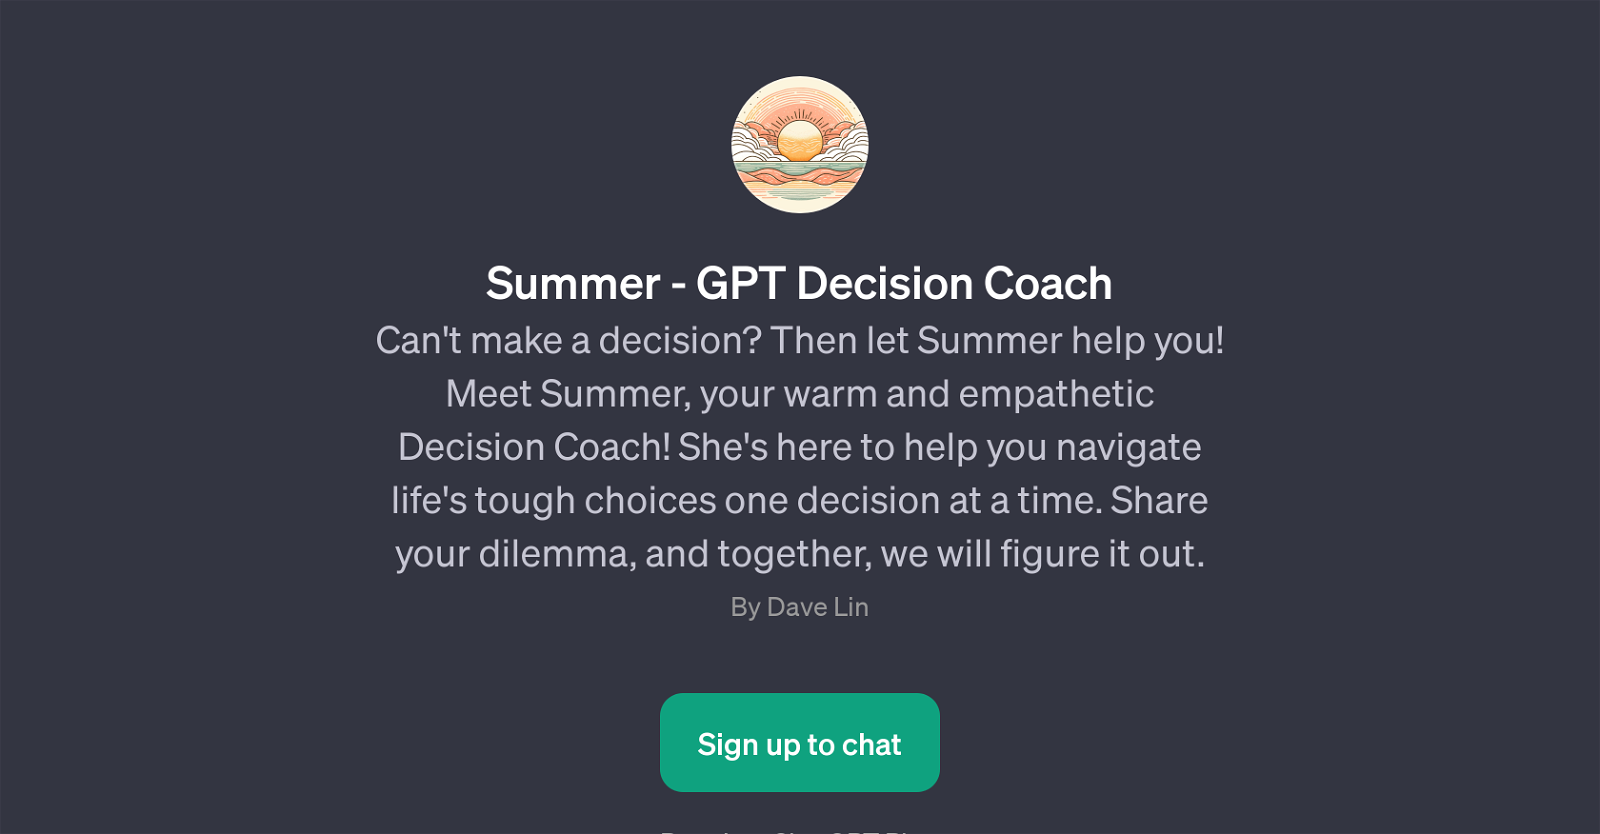 Summer - GPT Decision Coach website